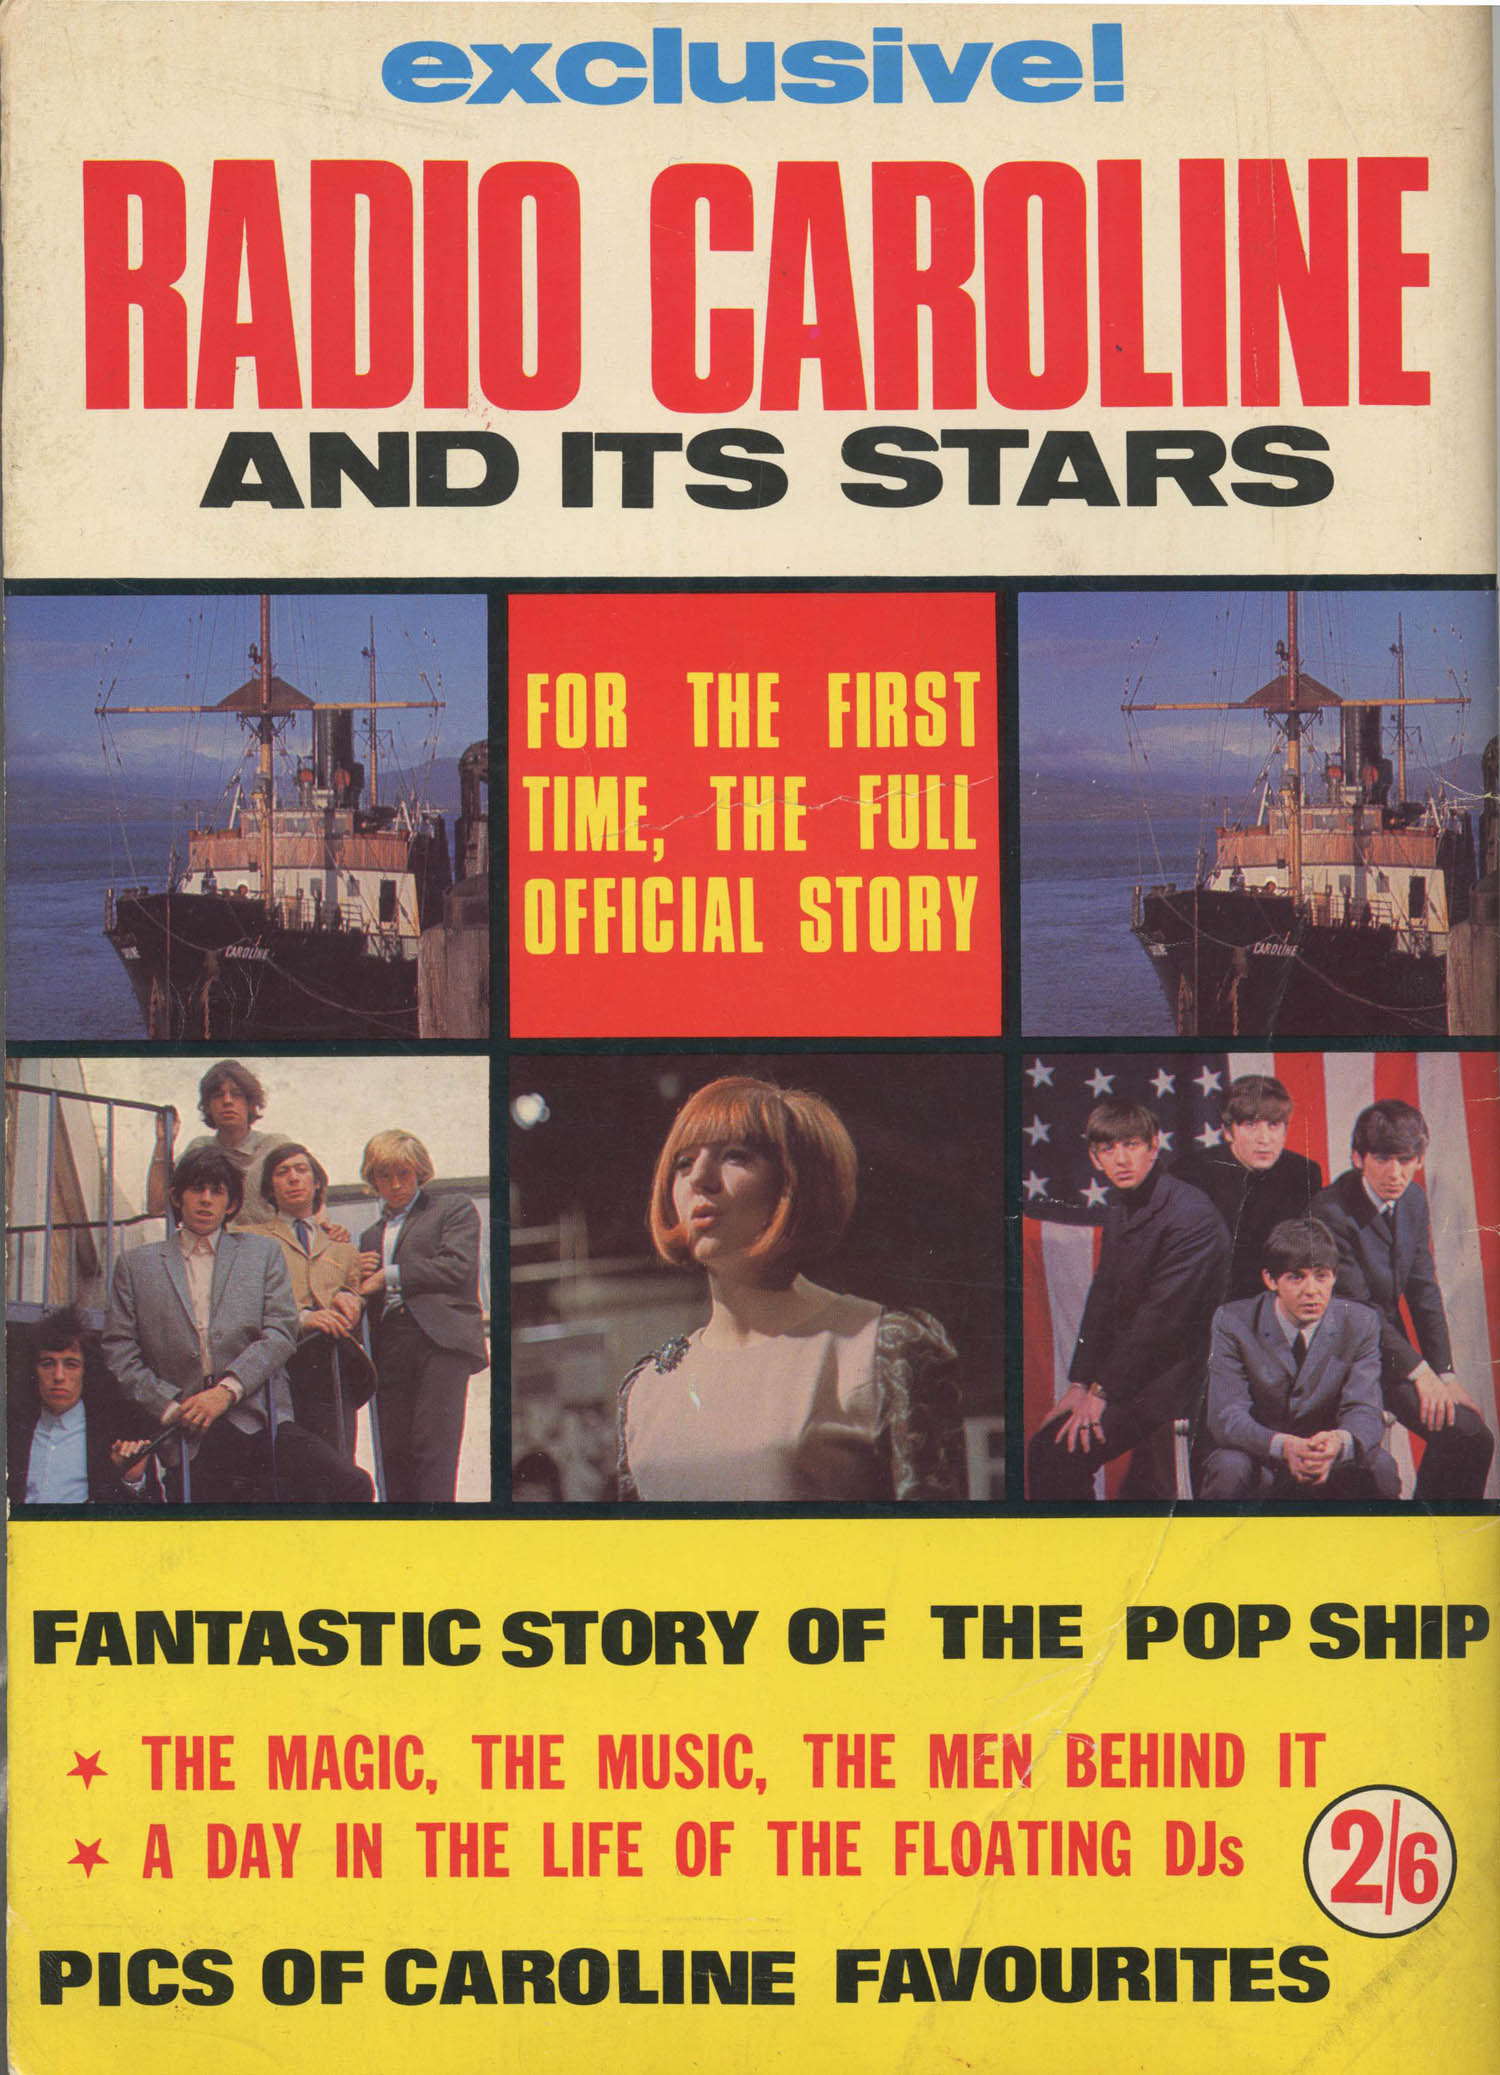  Radio pirata rock Offshore_radio_caroline_and_it's_stars